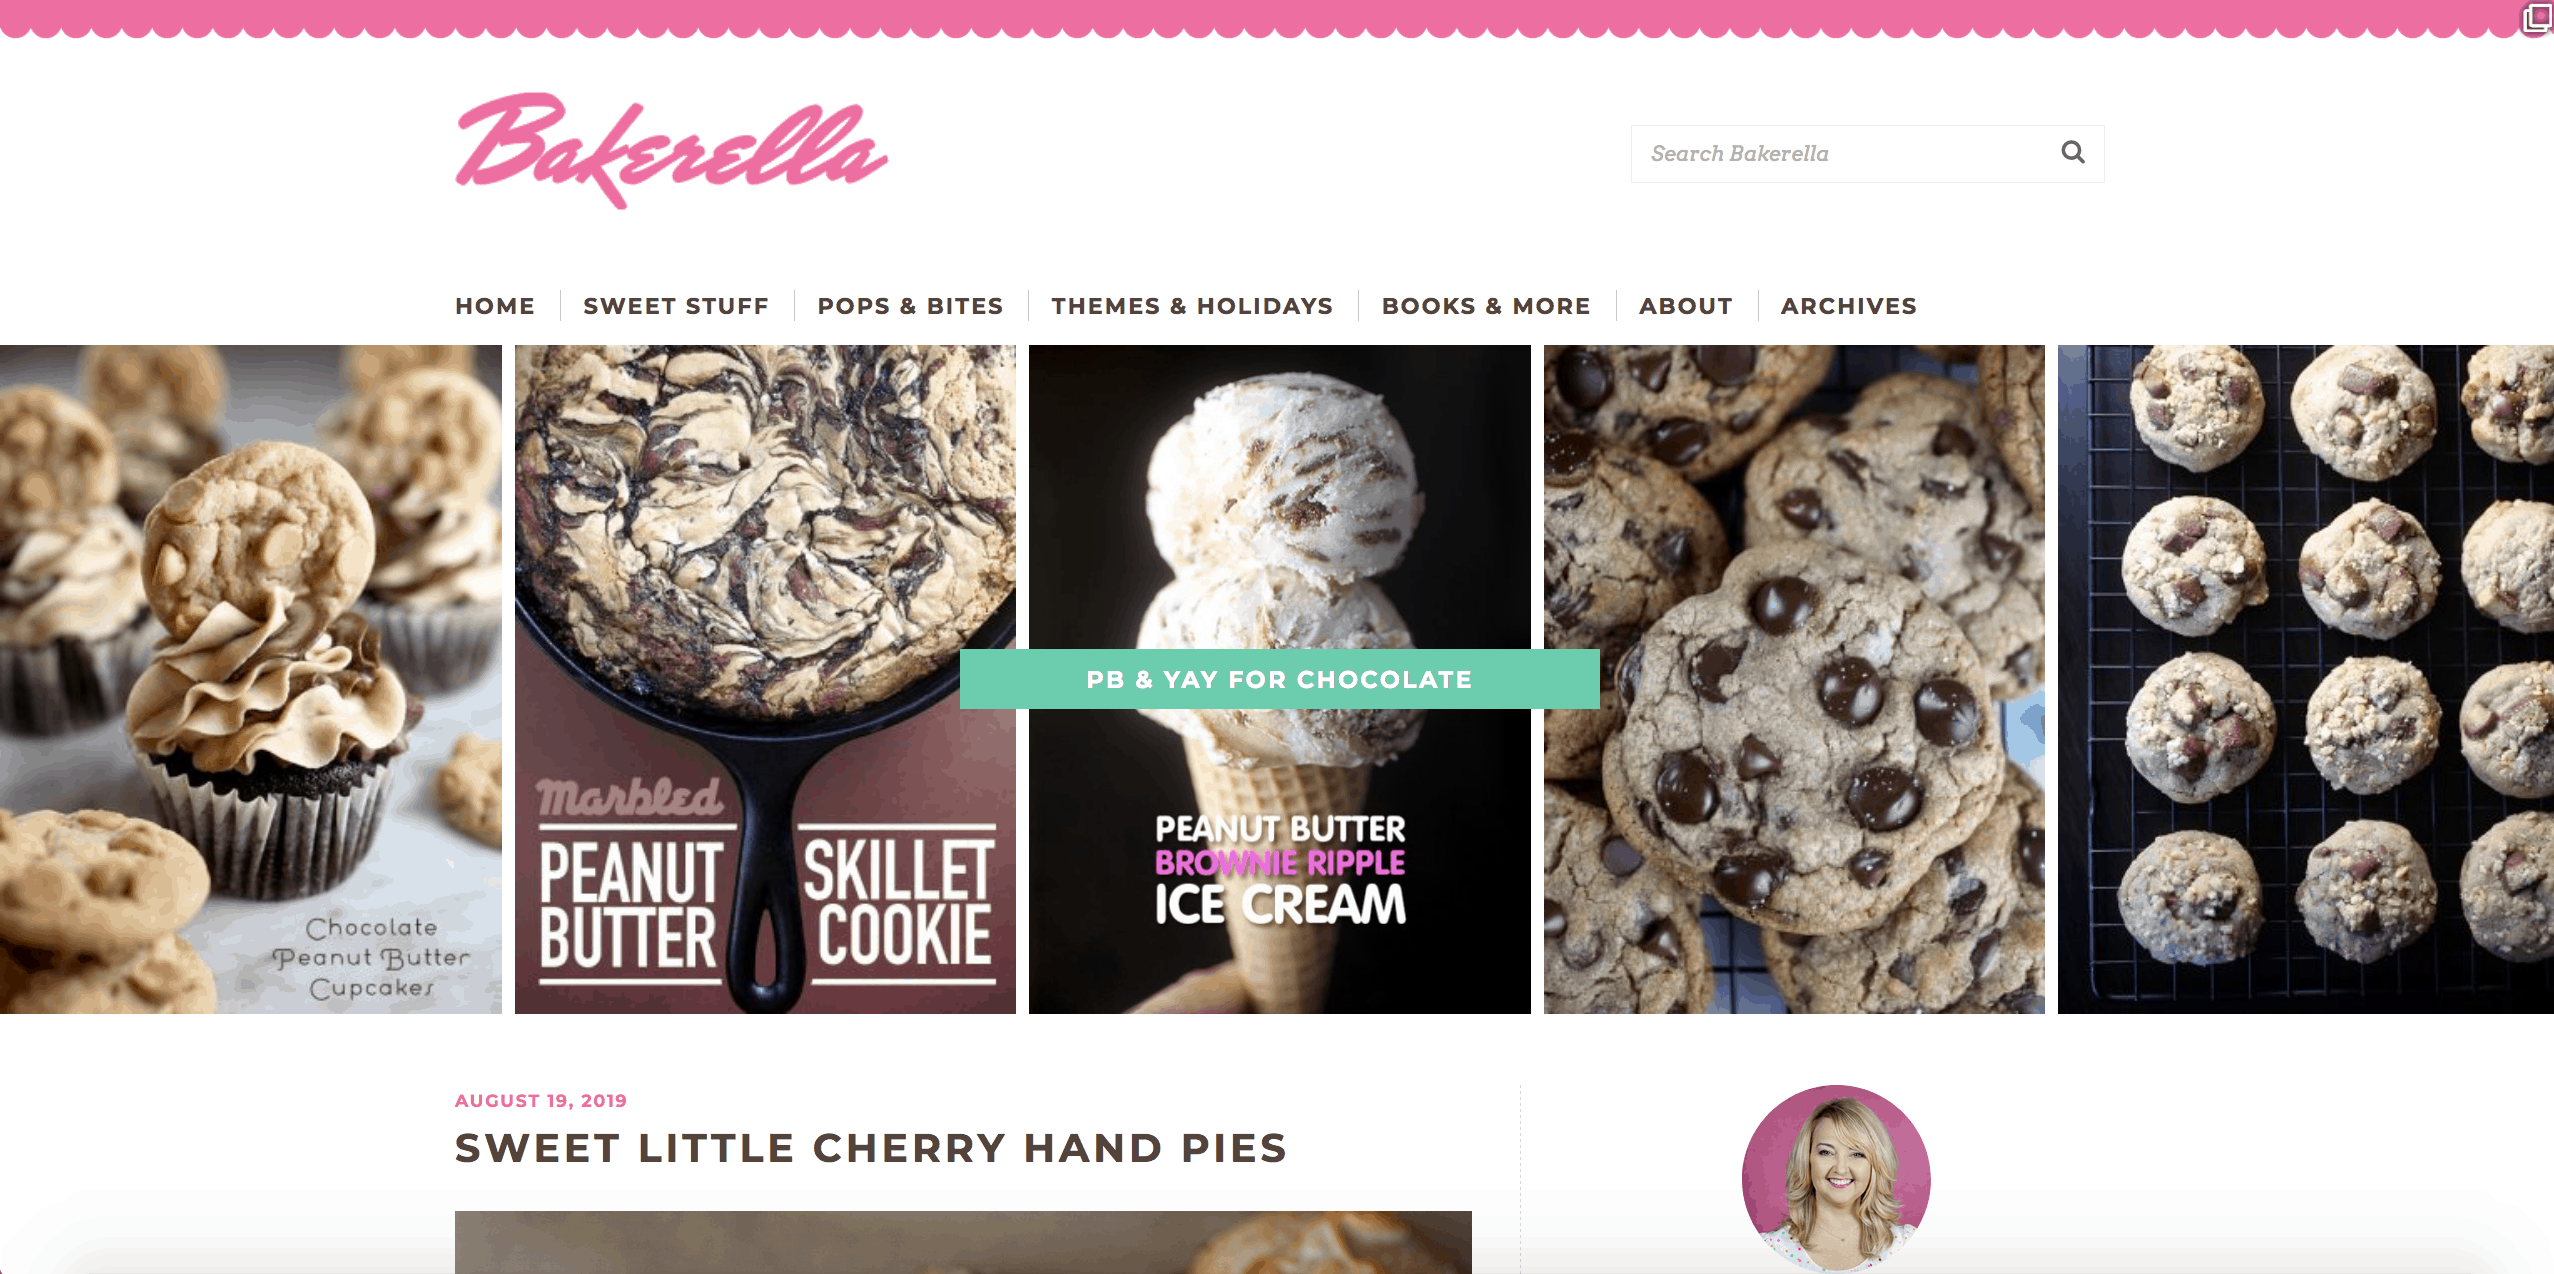 Food Blogs like Bakerella make a lot of money via ads and affiliate marketing. 